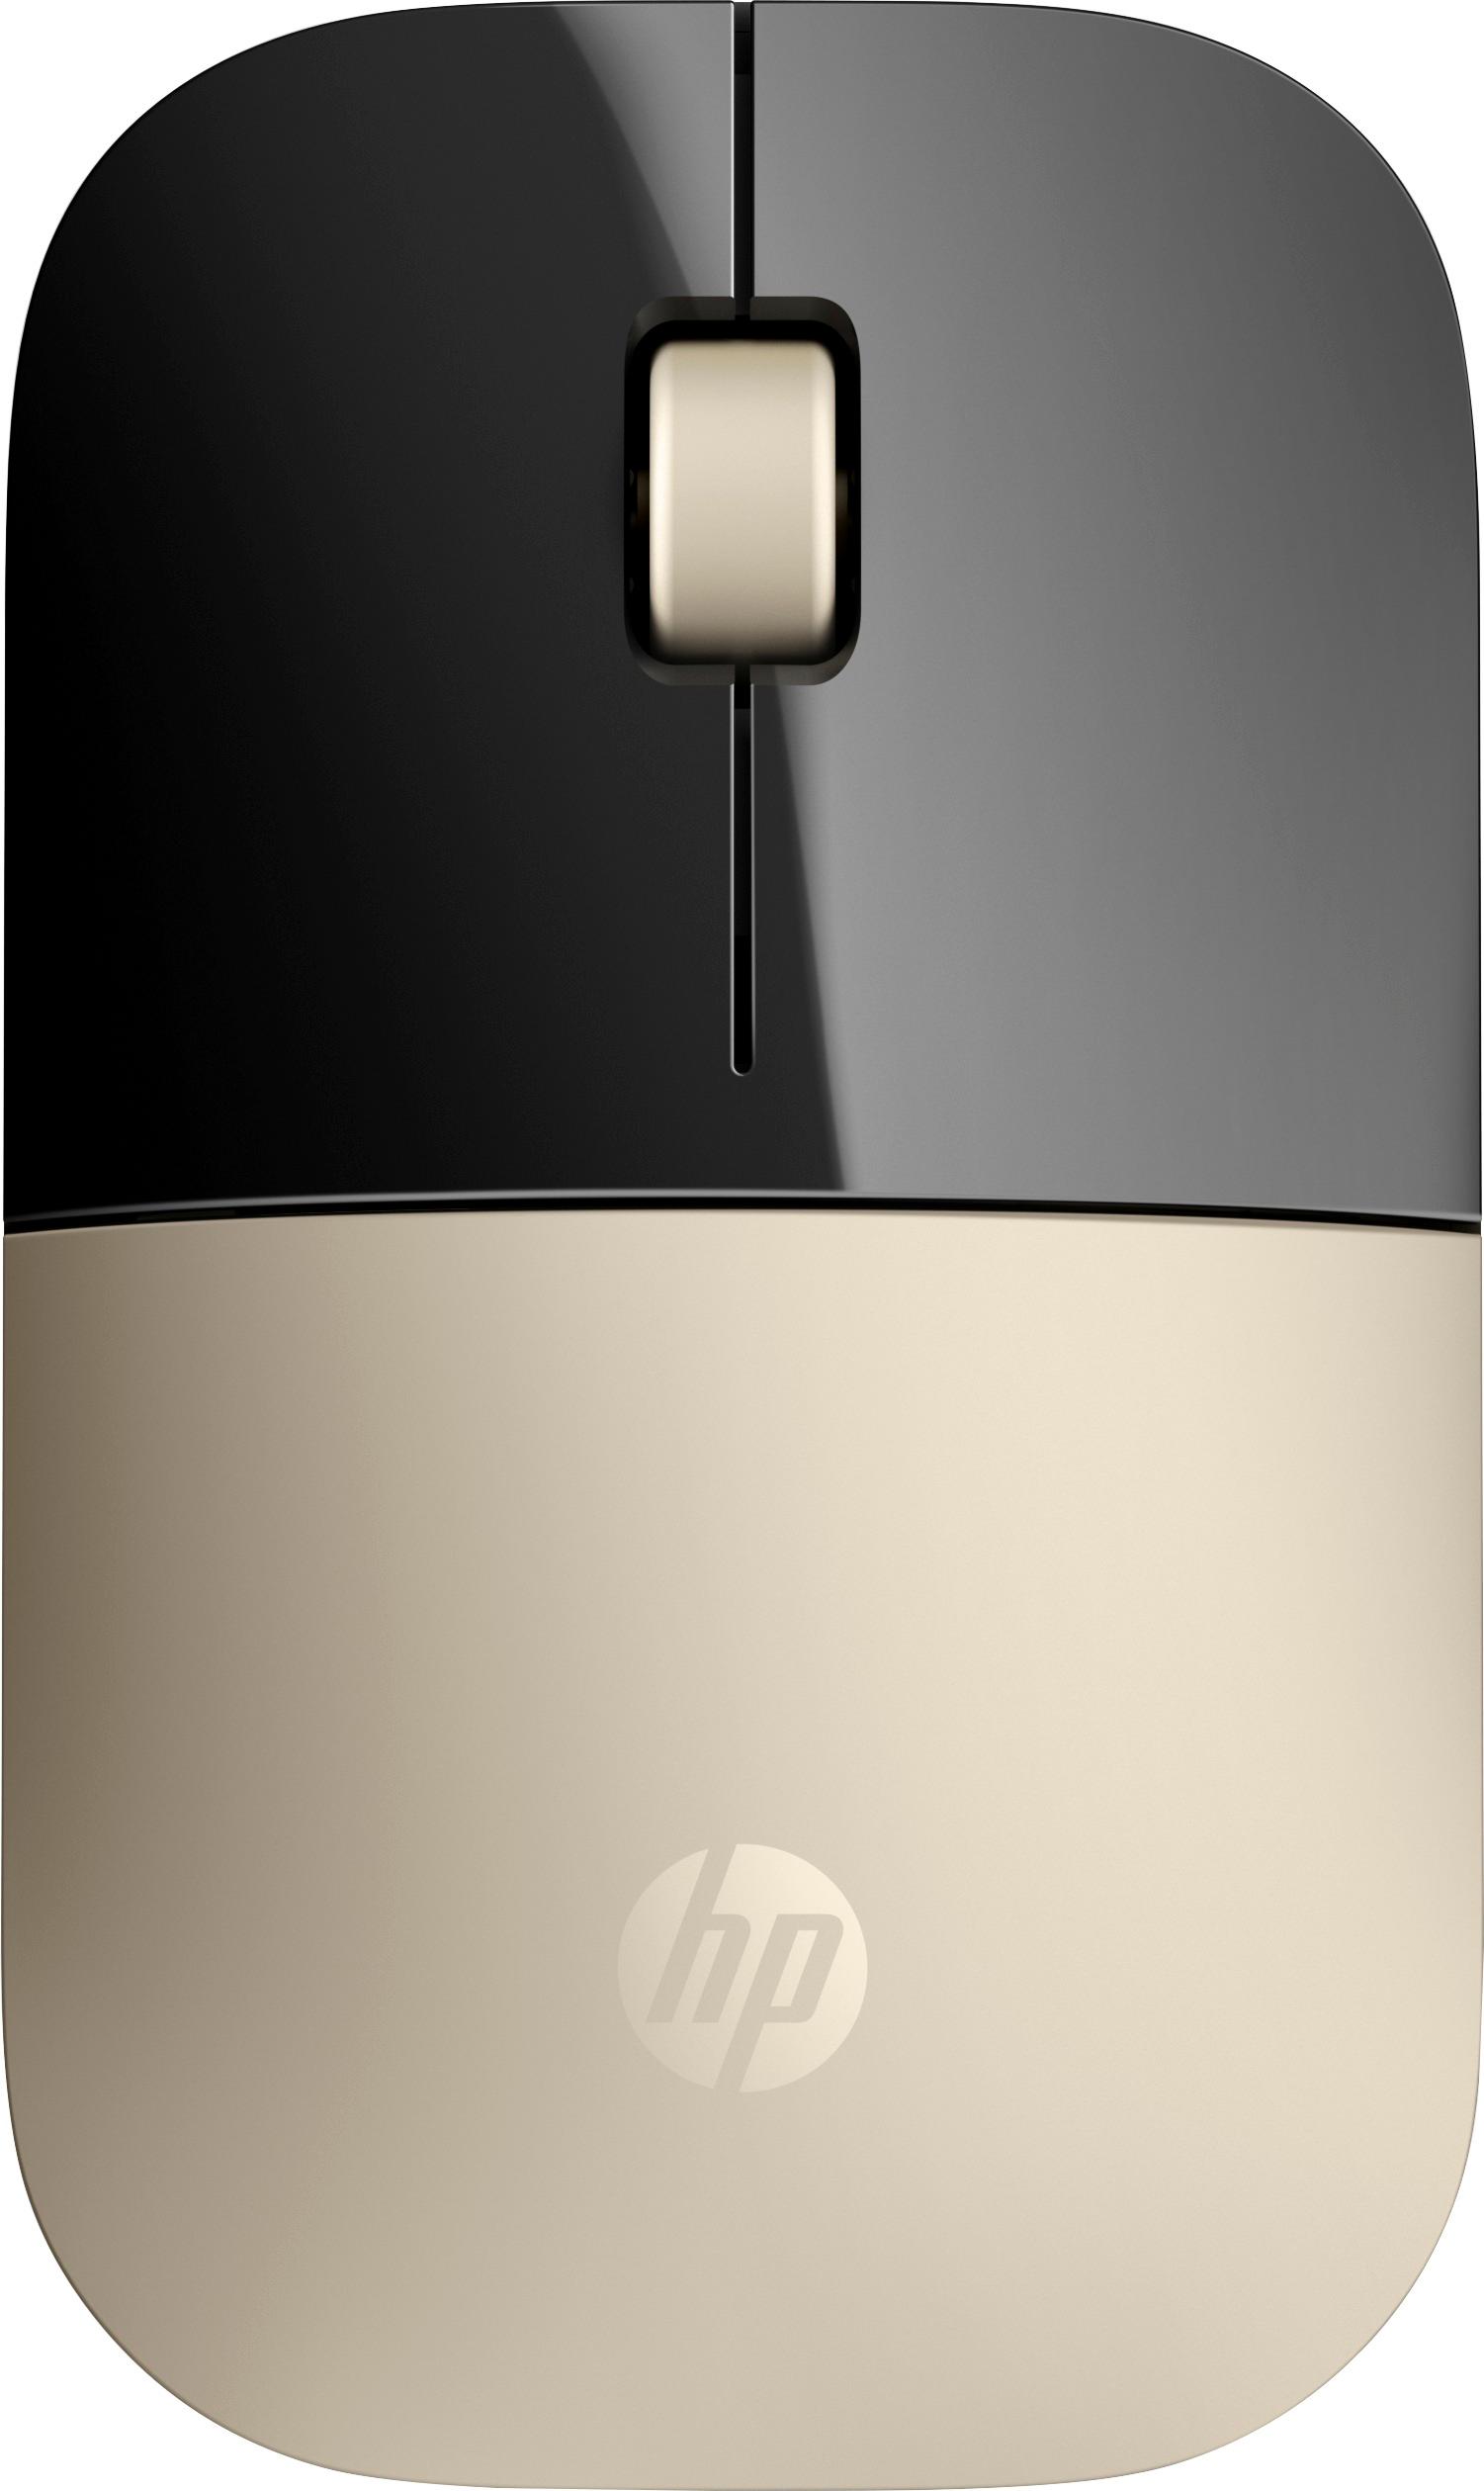 Z3700 HP Wireless Gold Buy LED Mouse Z3700 Best - Blue X7Q43AA#ABL